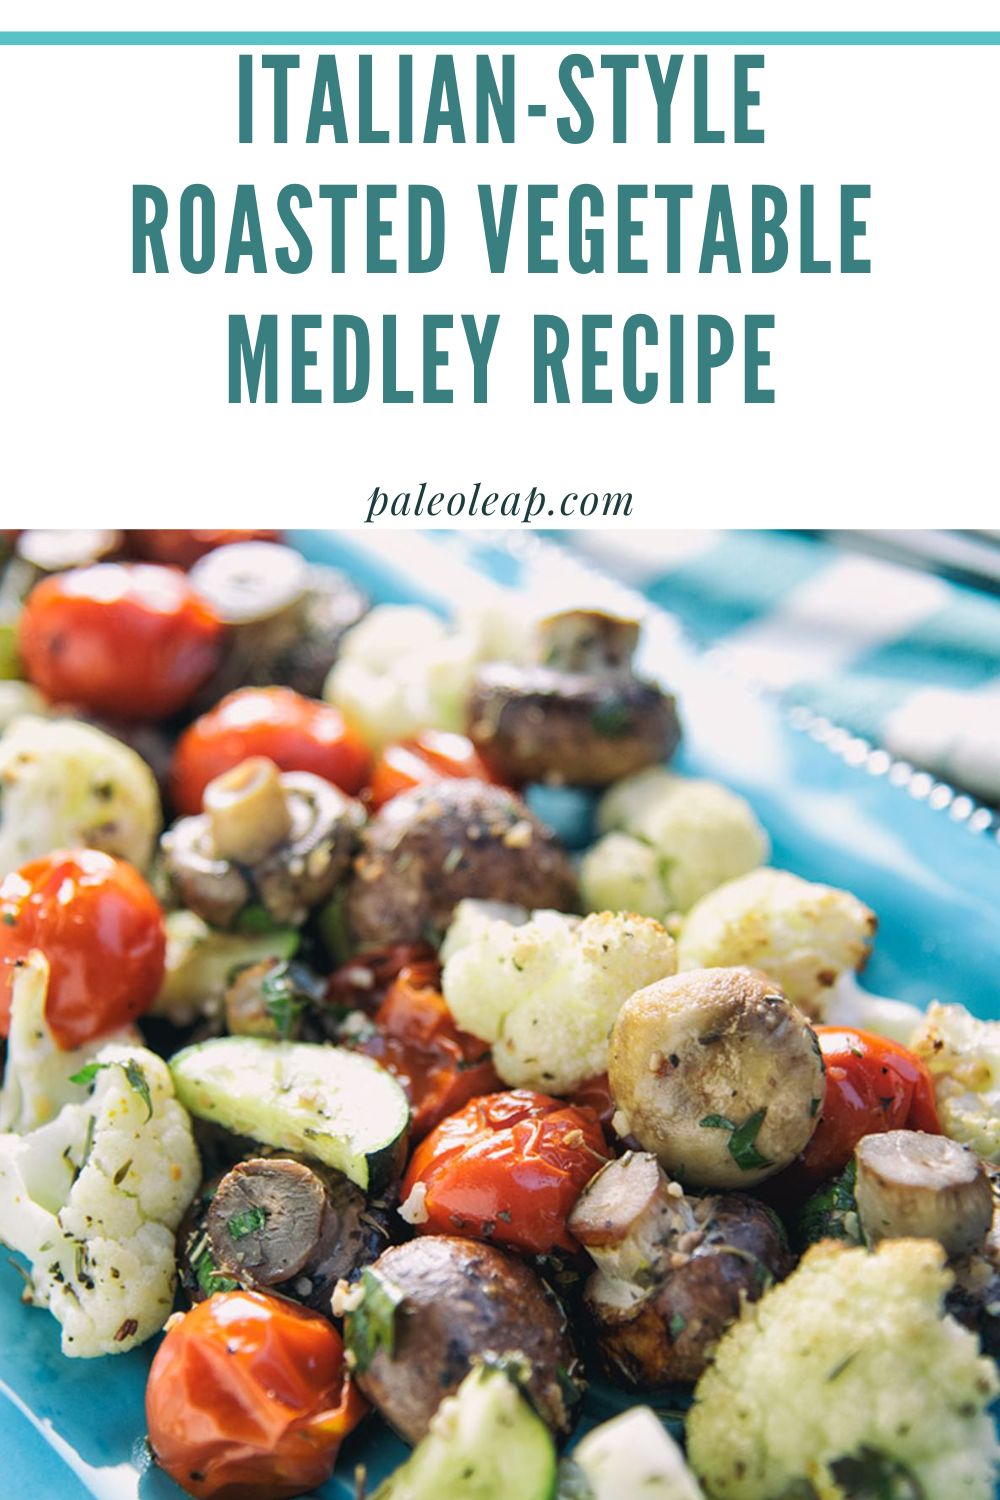 Italian-Style Roasted Vegetable Medley Recipe | Paleo Leap